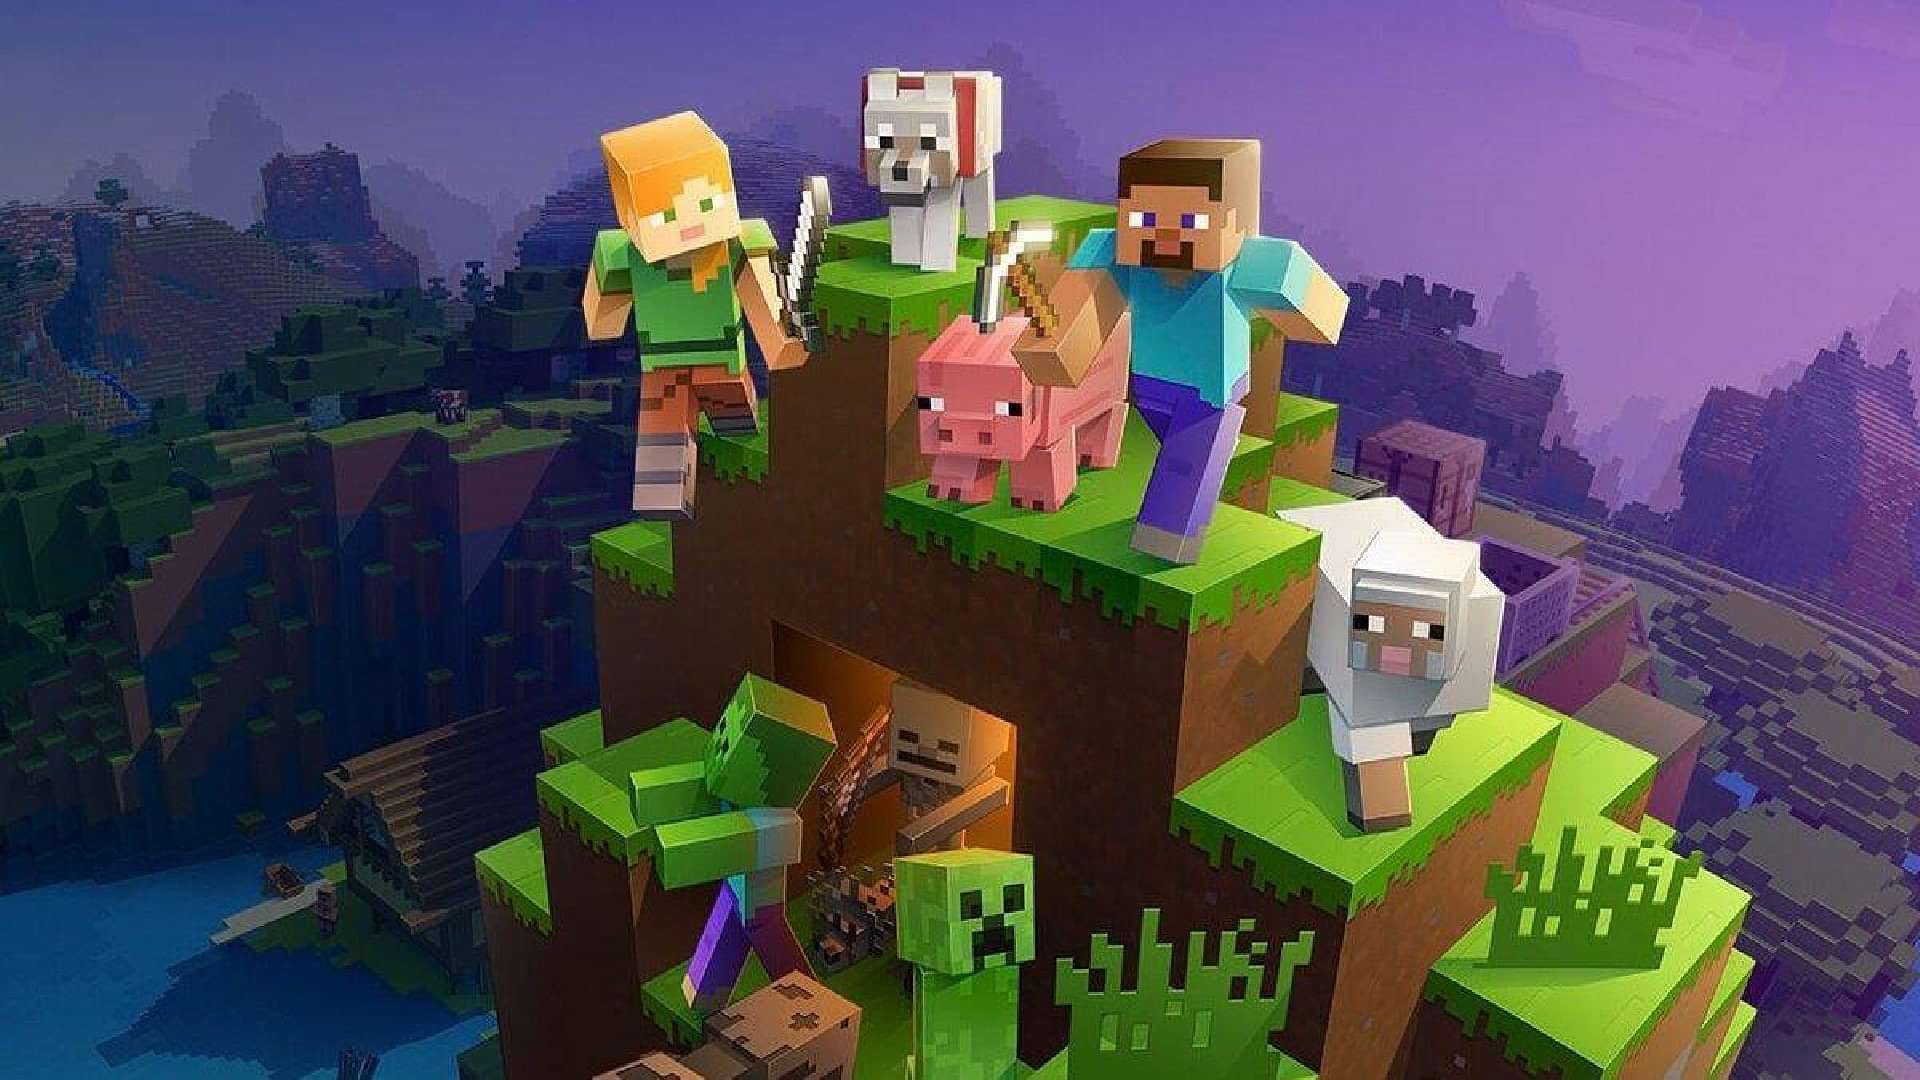 List of Minecraft 1.20 Mods 